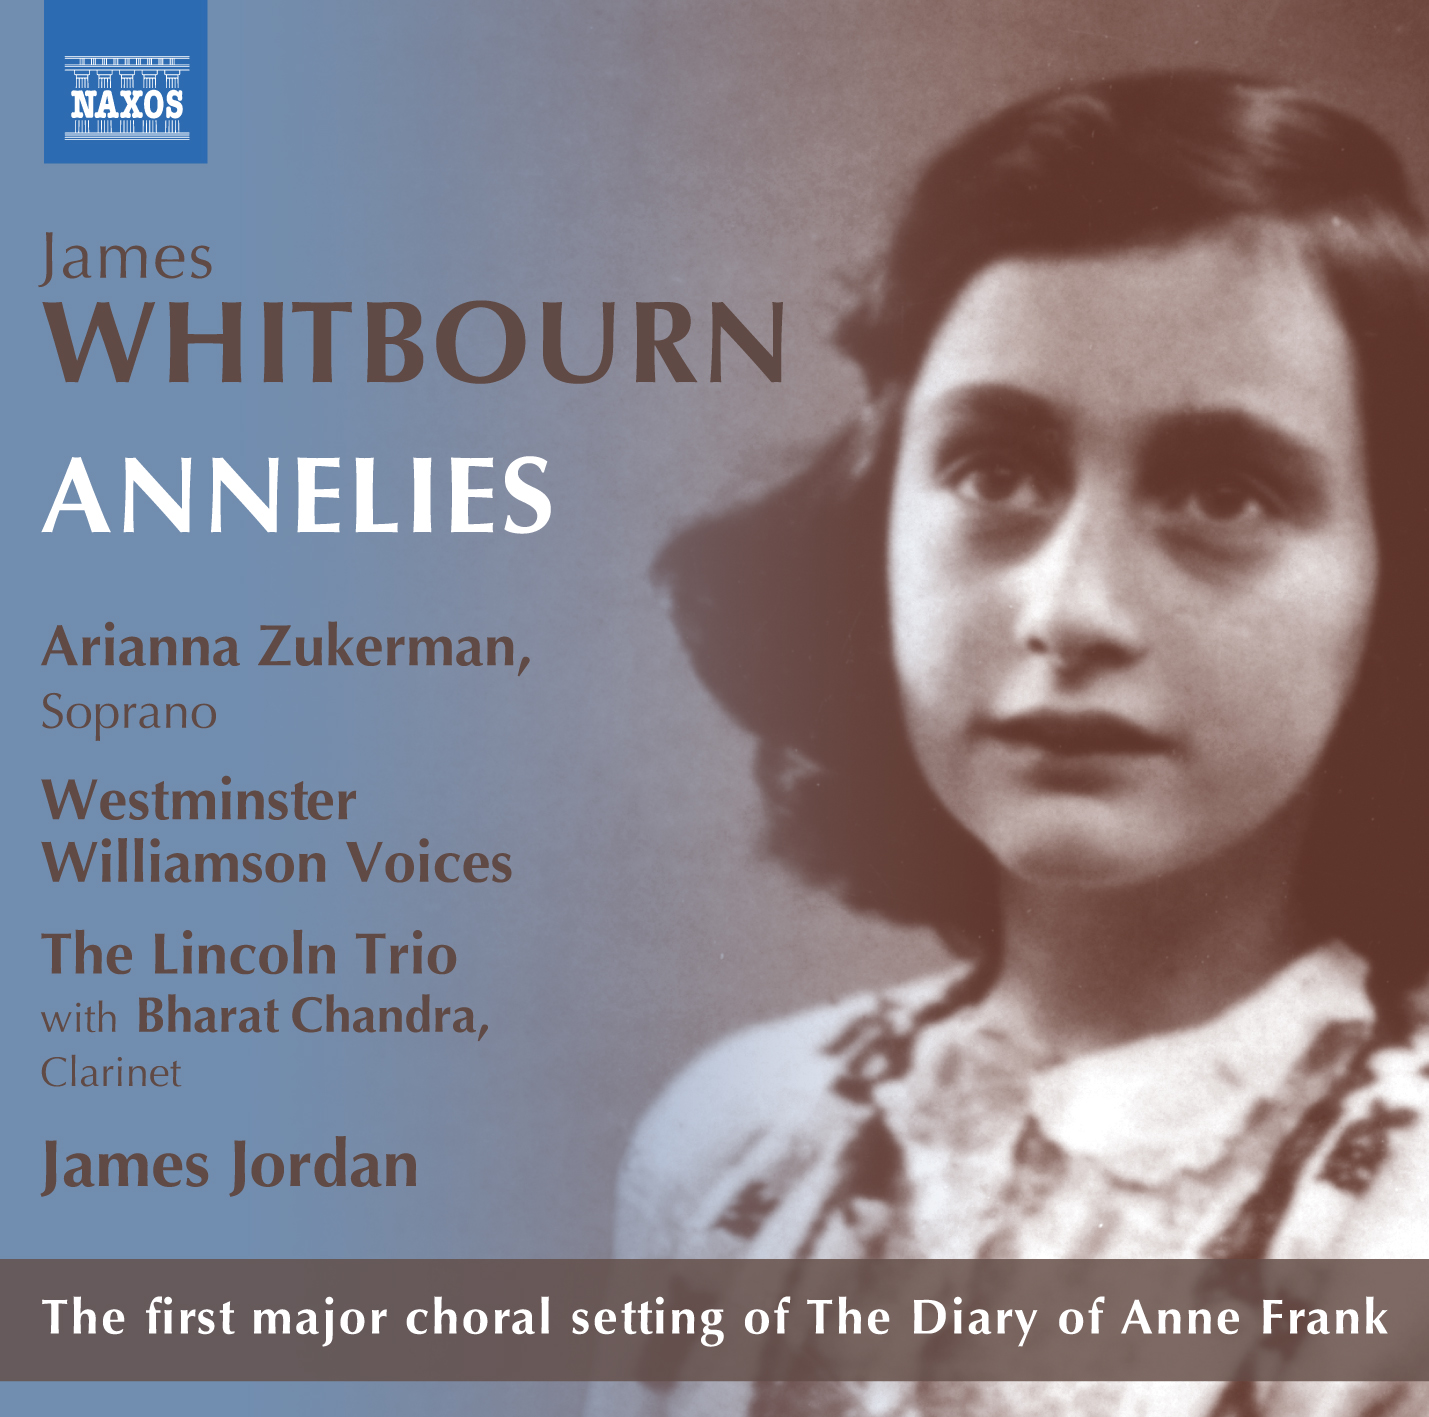 James Whitbourn's Annelies